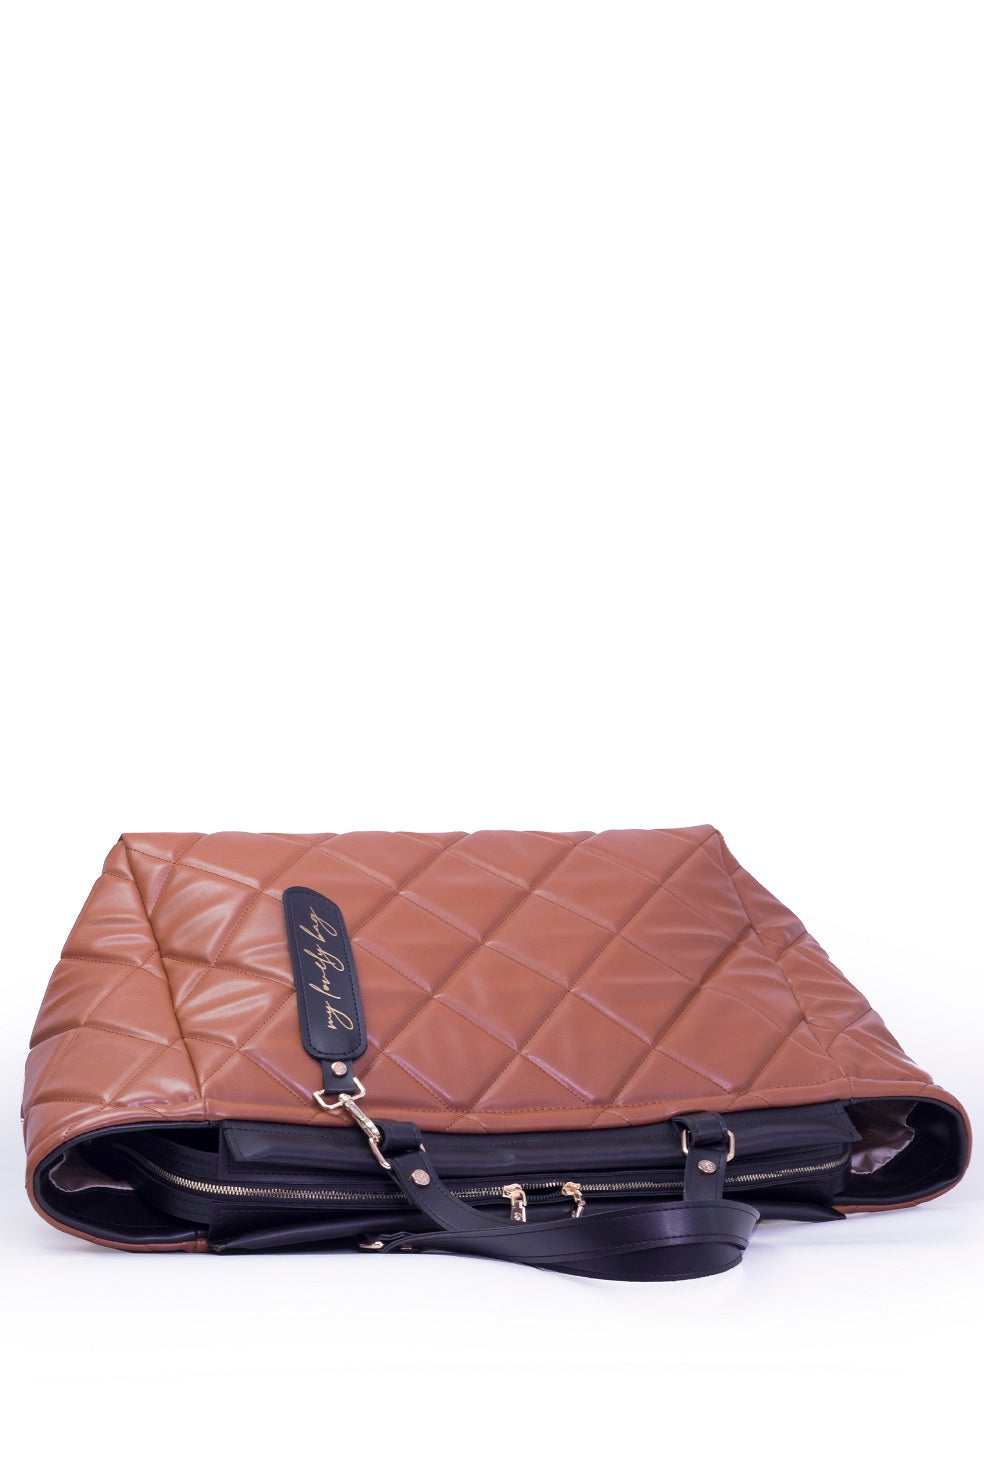 Luxury large handbag for weekend and trip - BAG - LOLA - CAMEL BLACK GOLD